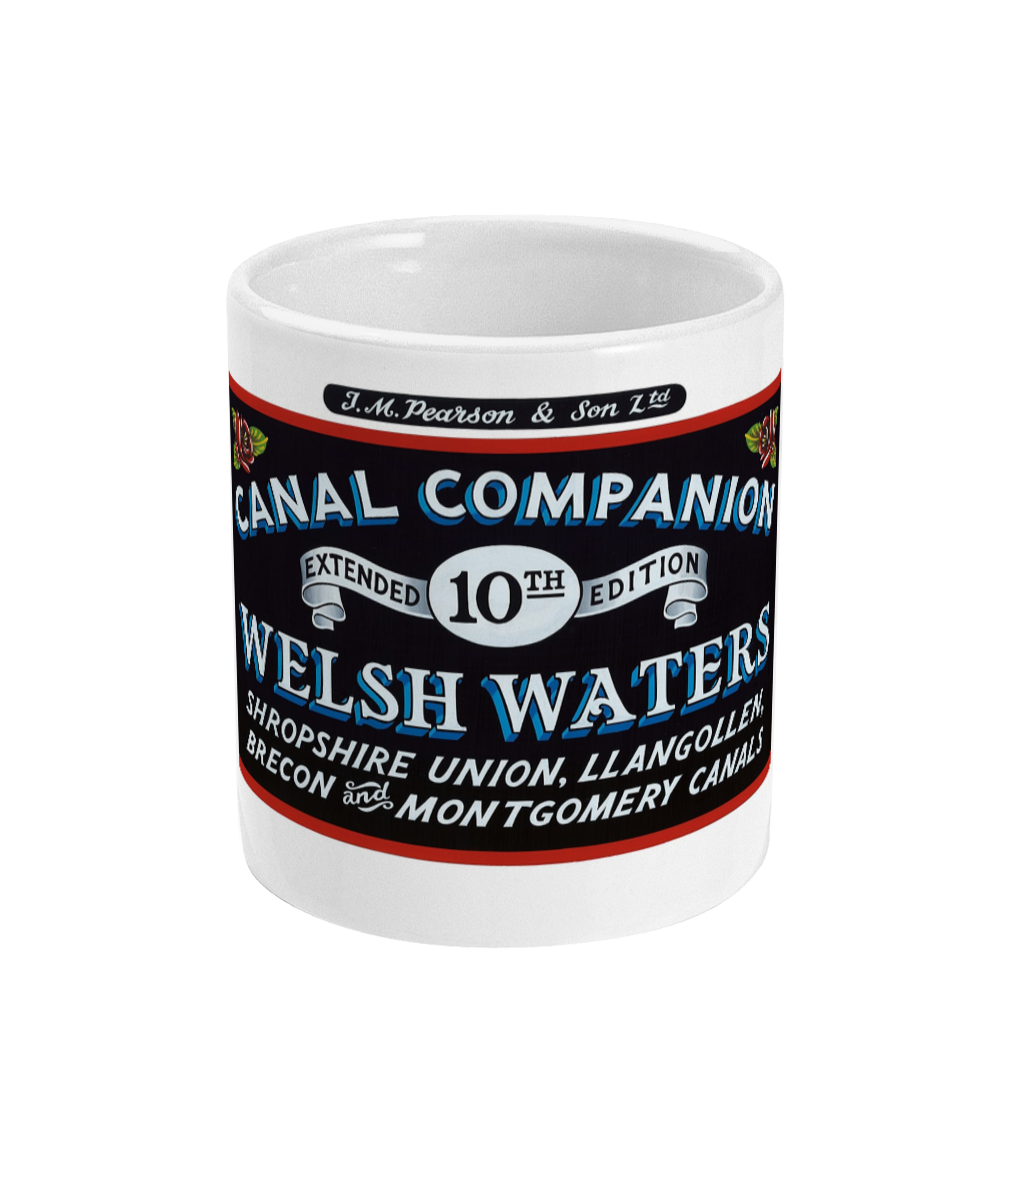 Pearson Canal Companion Ceramic Mug - Welsh Waters